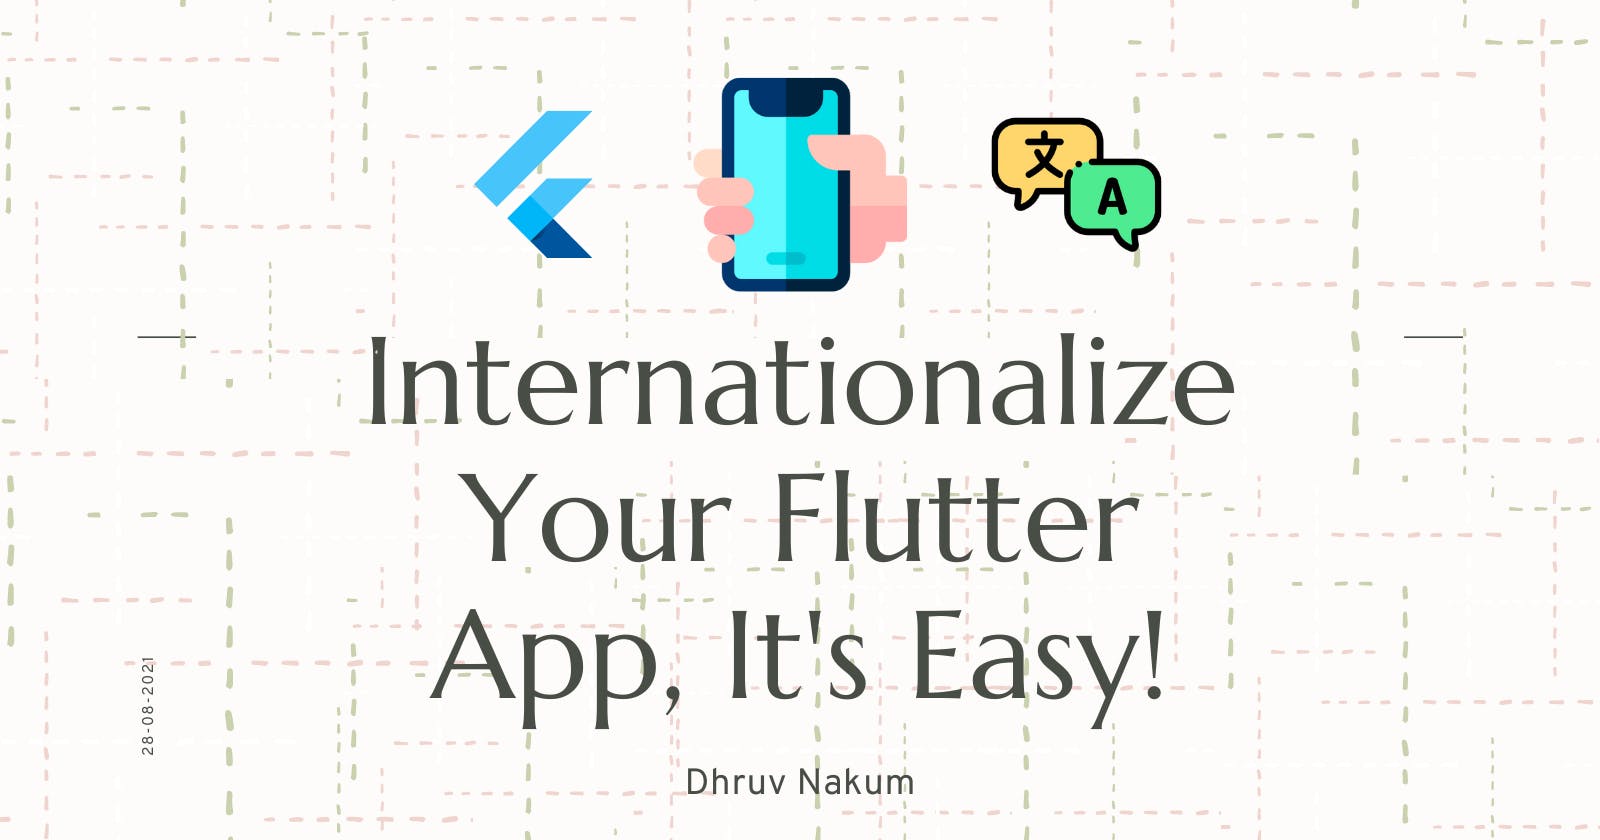 Internationalize Your Flutter App, It's Easy!